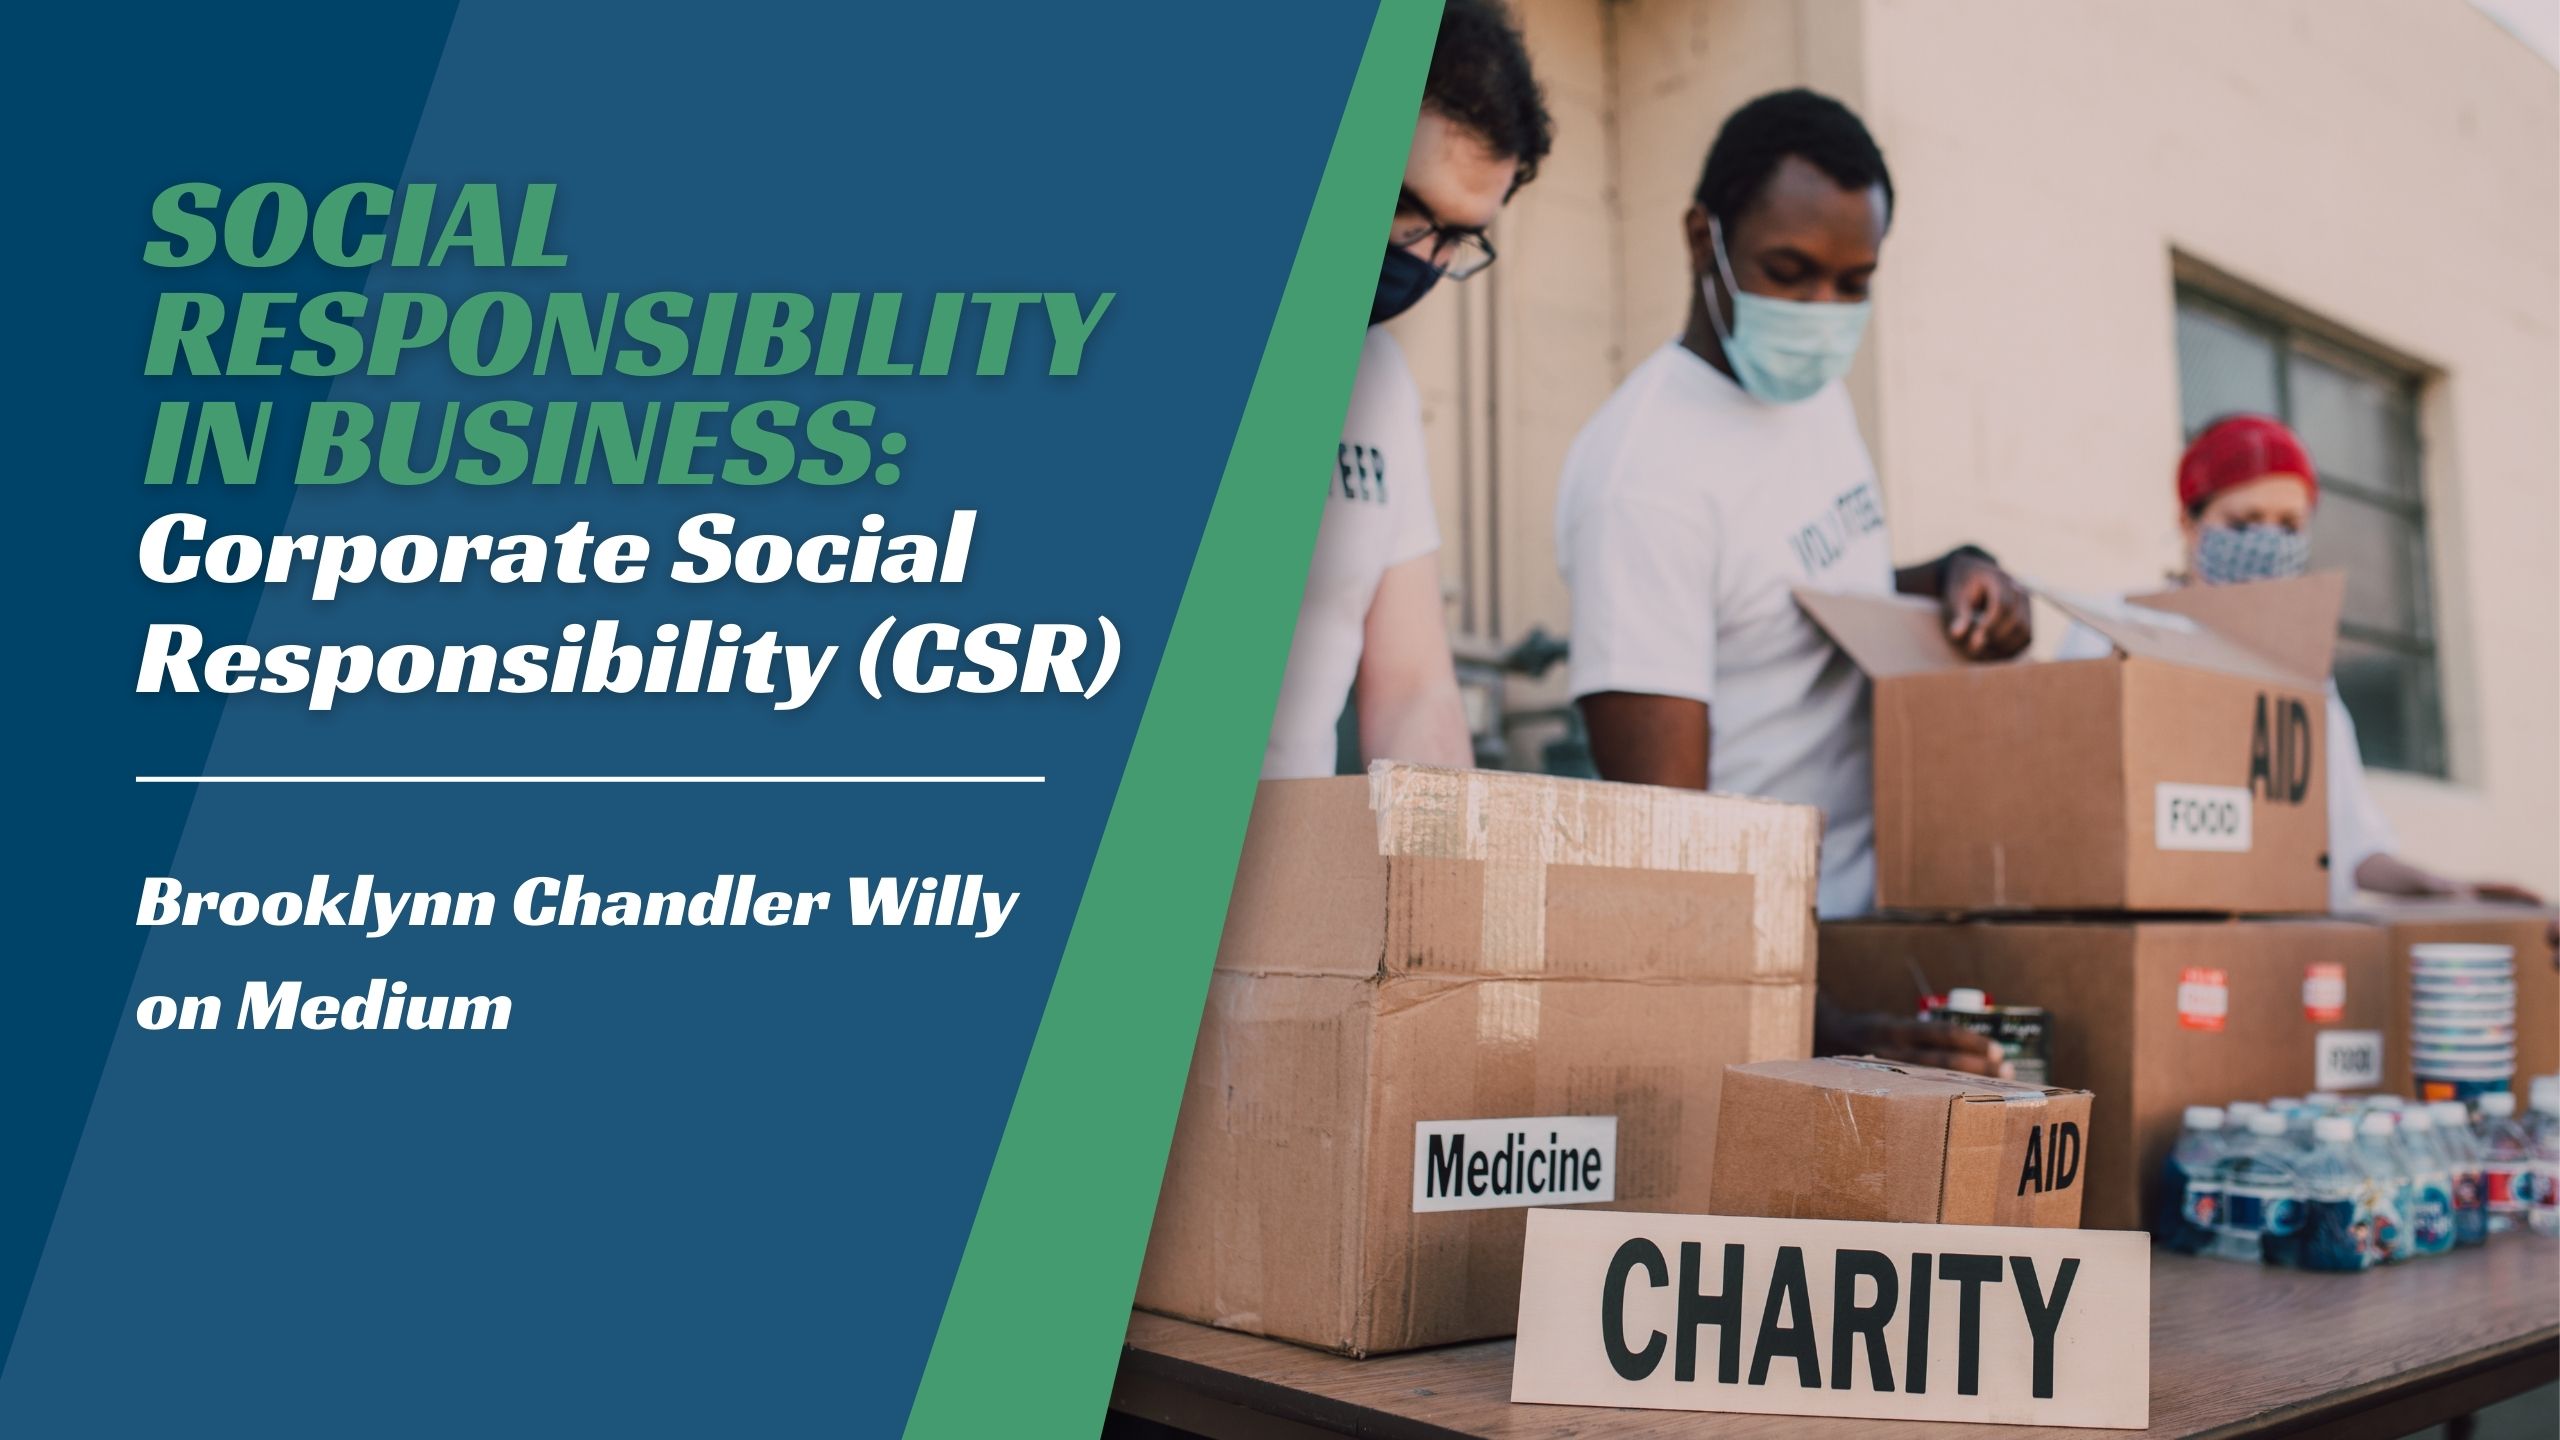 Corporate Social
Responsibility (CSR)

Brooklynn Chandler Willy

on Medium

! J
No
Ti Es
Baits, fi
dik